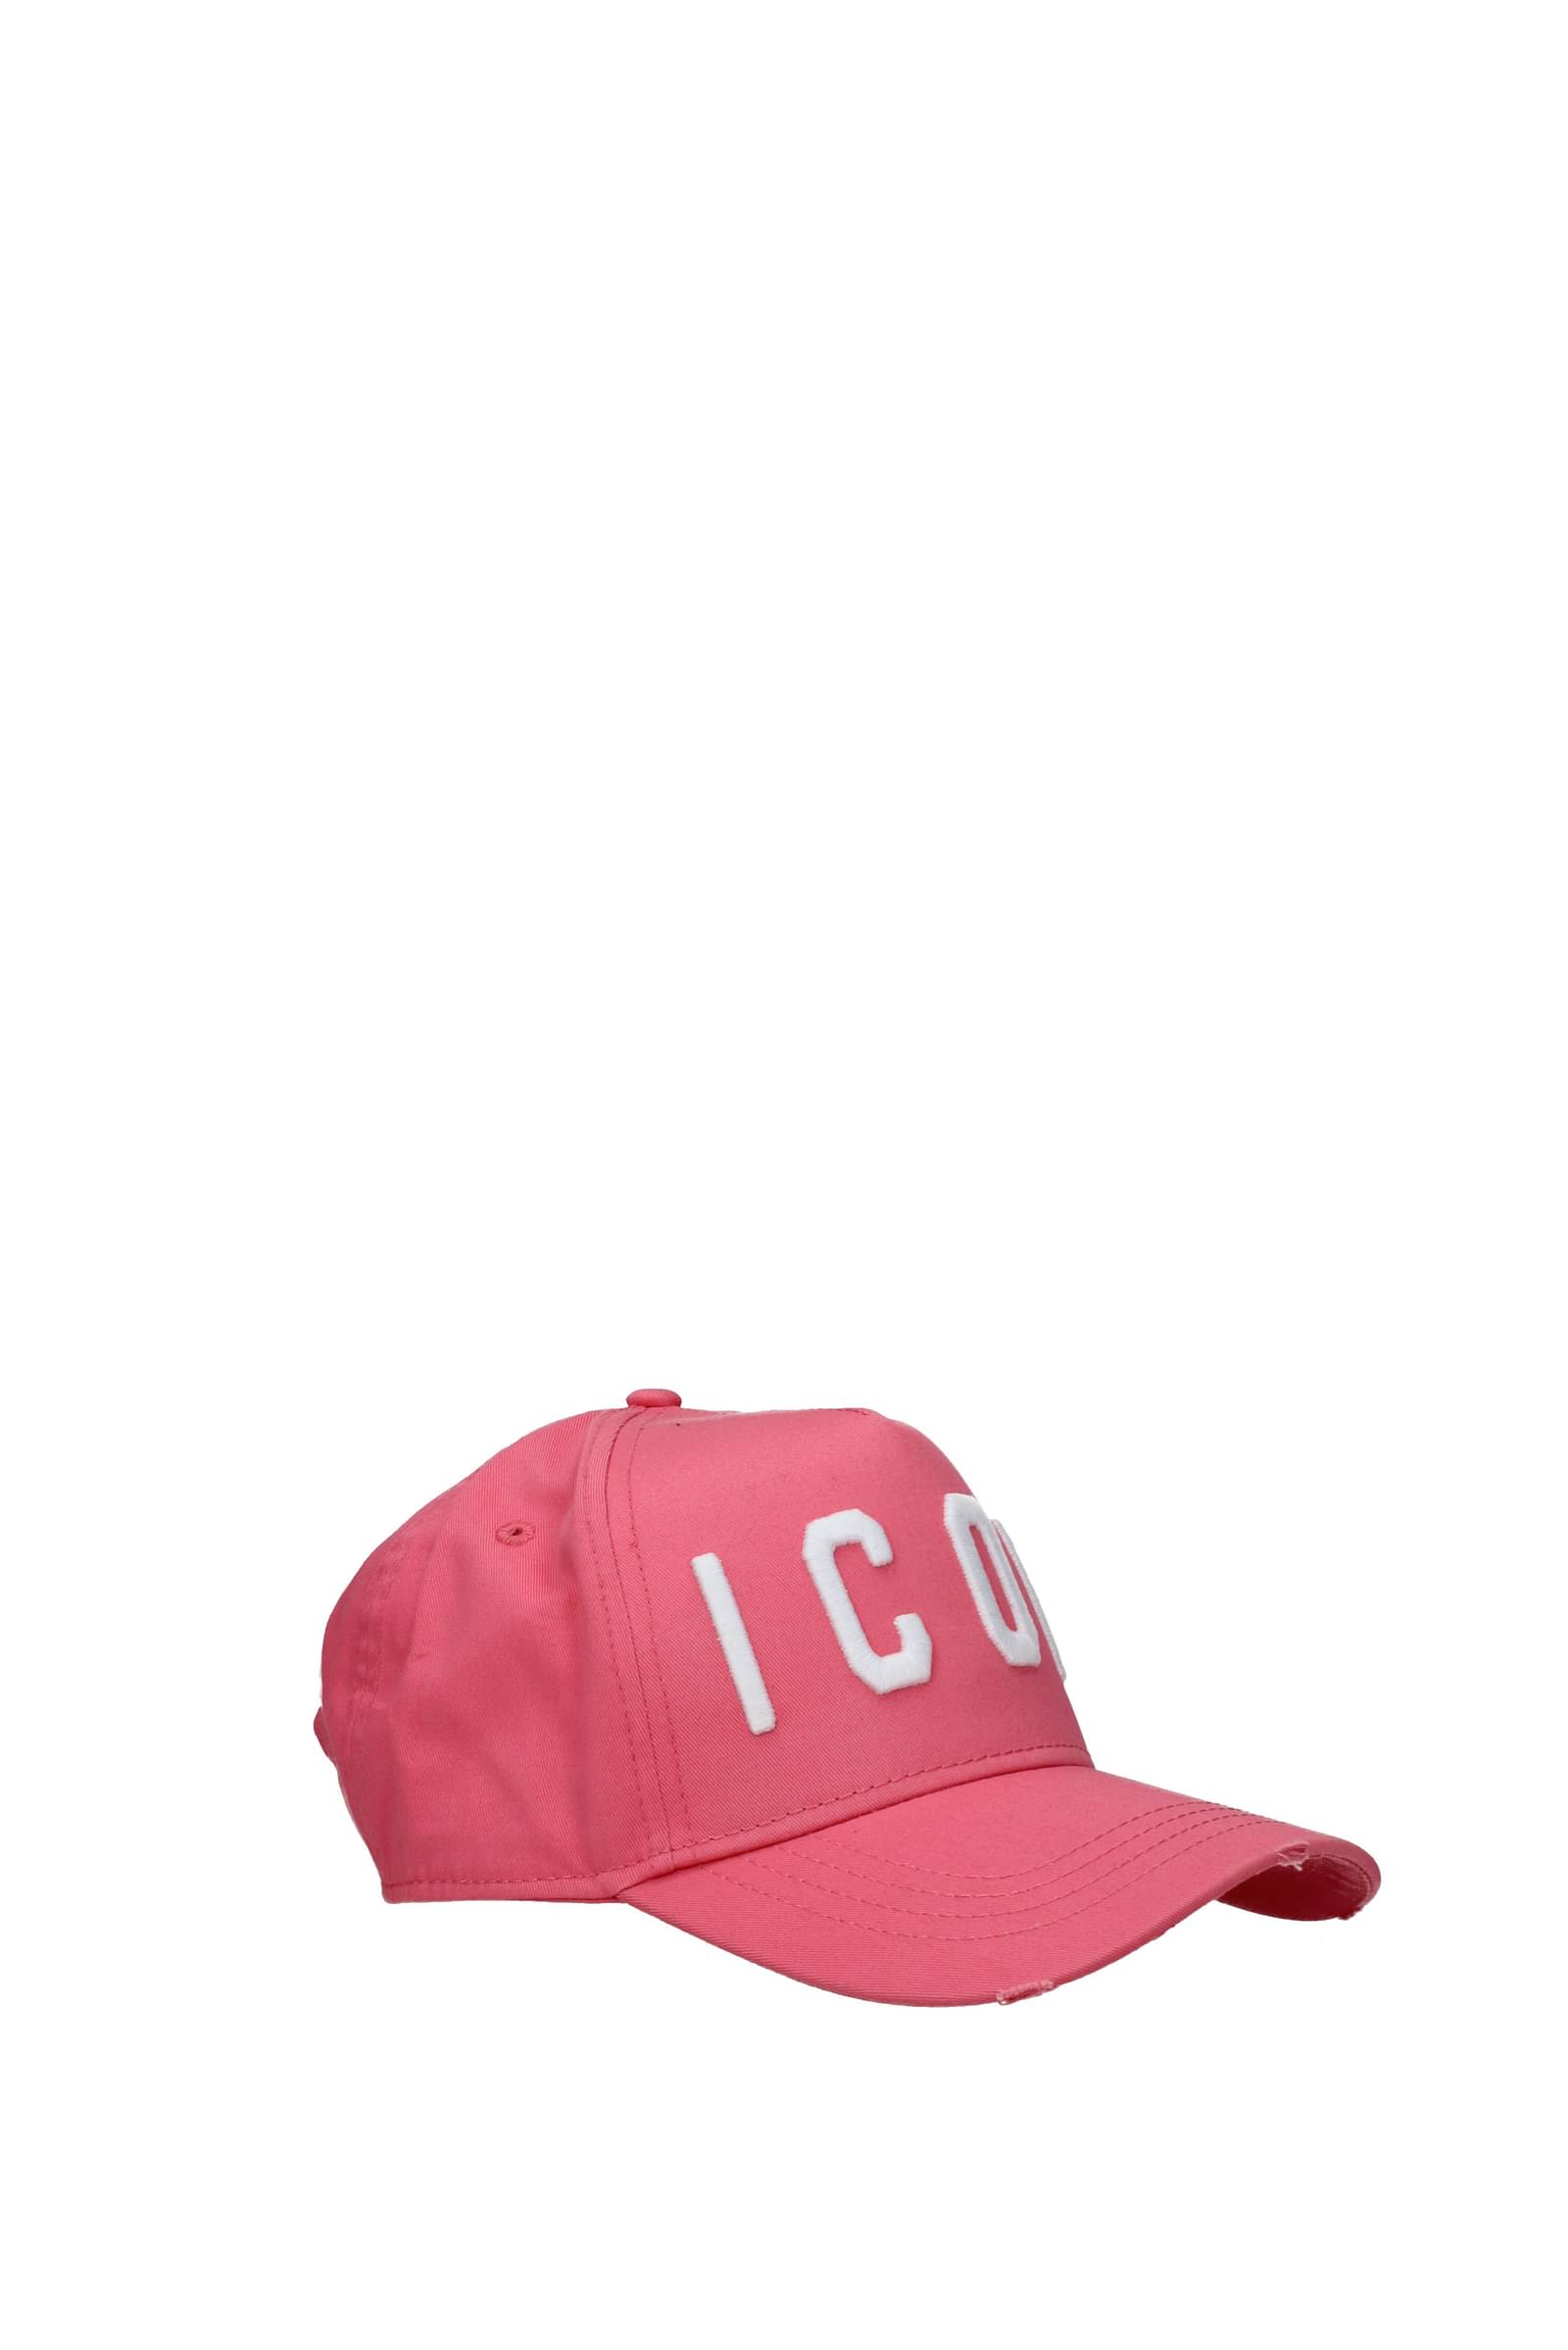 Dsquared2 帽子 icon 女性 BCW400105C00001M1972 コットン